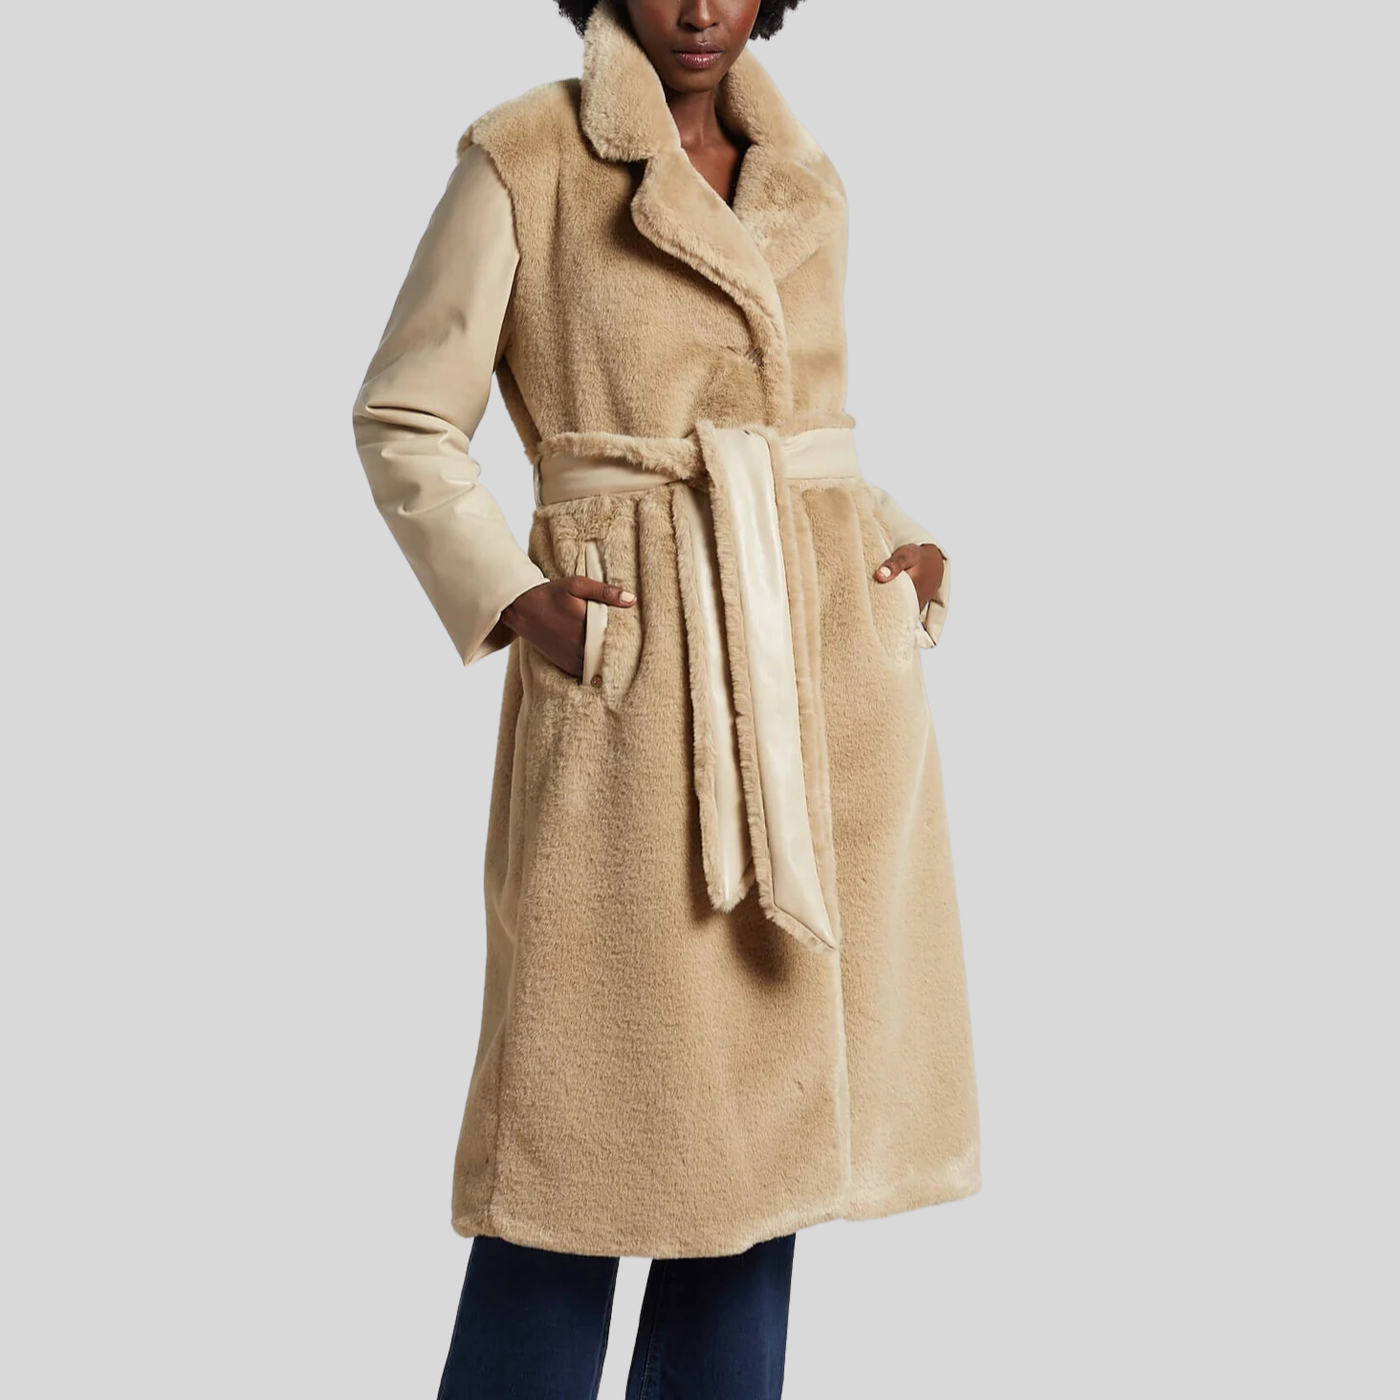 Gotstyle Fashion - Adroit Atelier Coats Faux Fur Vegan Leather Sleeves Long Coat - Beige